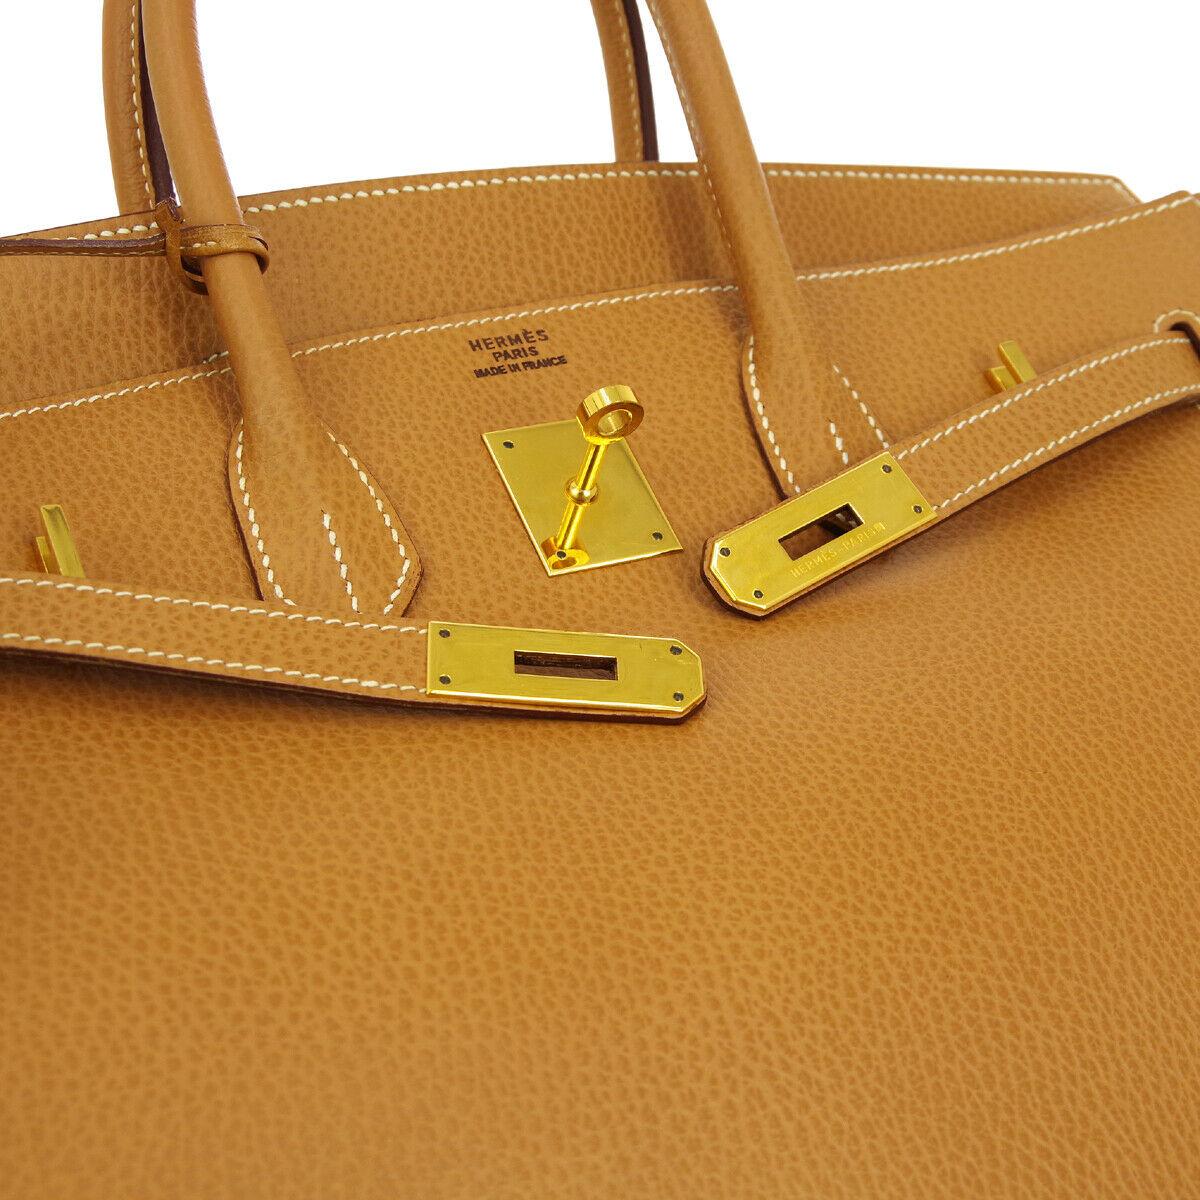 Brown Hermes Birkin 35 Cognac Leather Gold Top Carryall Handle Satchel Travel Tote Bag